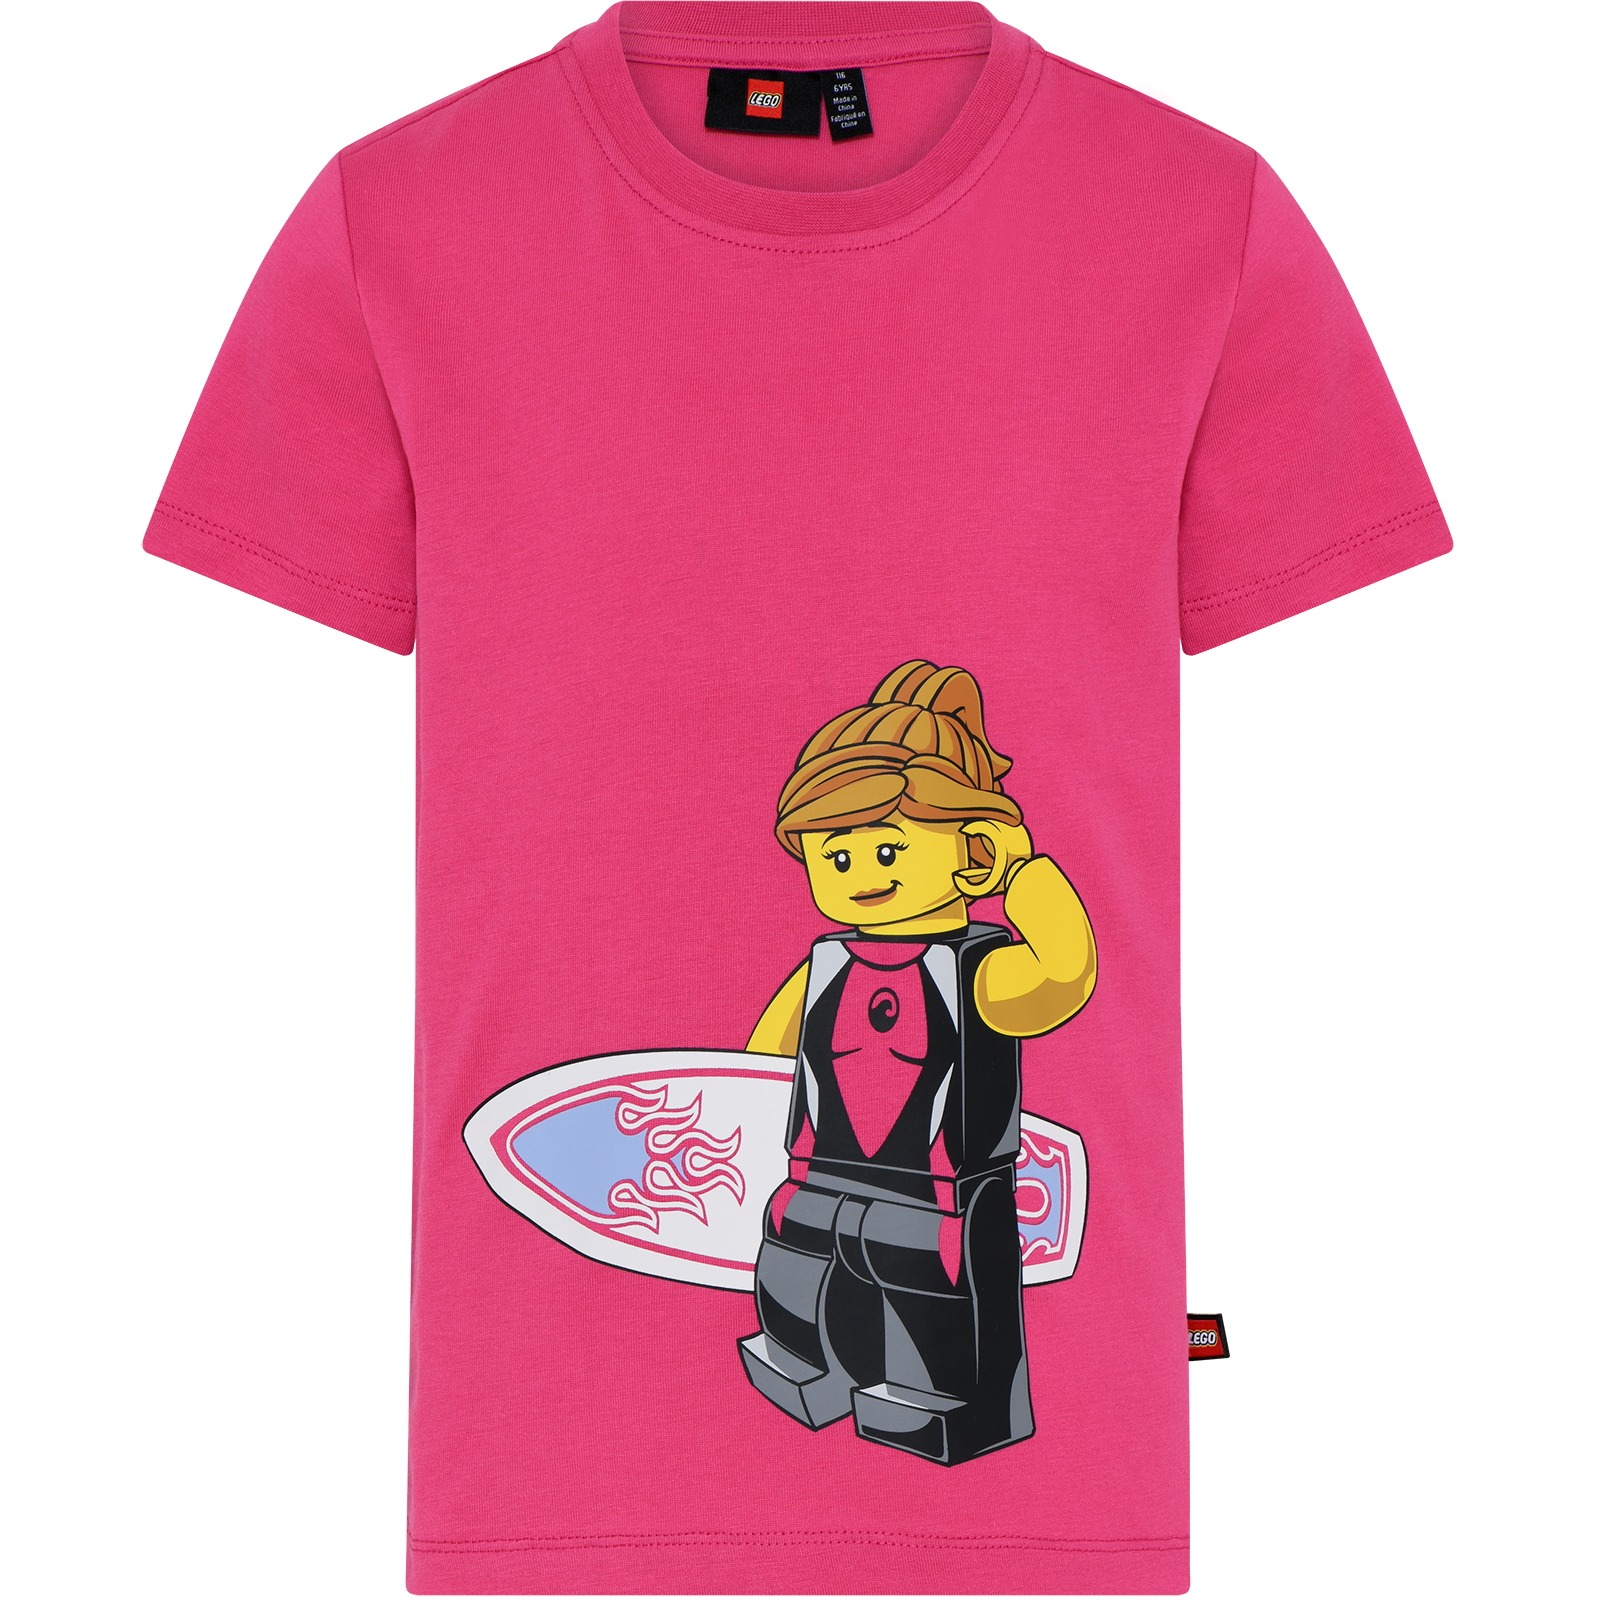 Produktbild von LEGO® Taylor 311 - Kinder T-Shirt - Lilac Rose